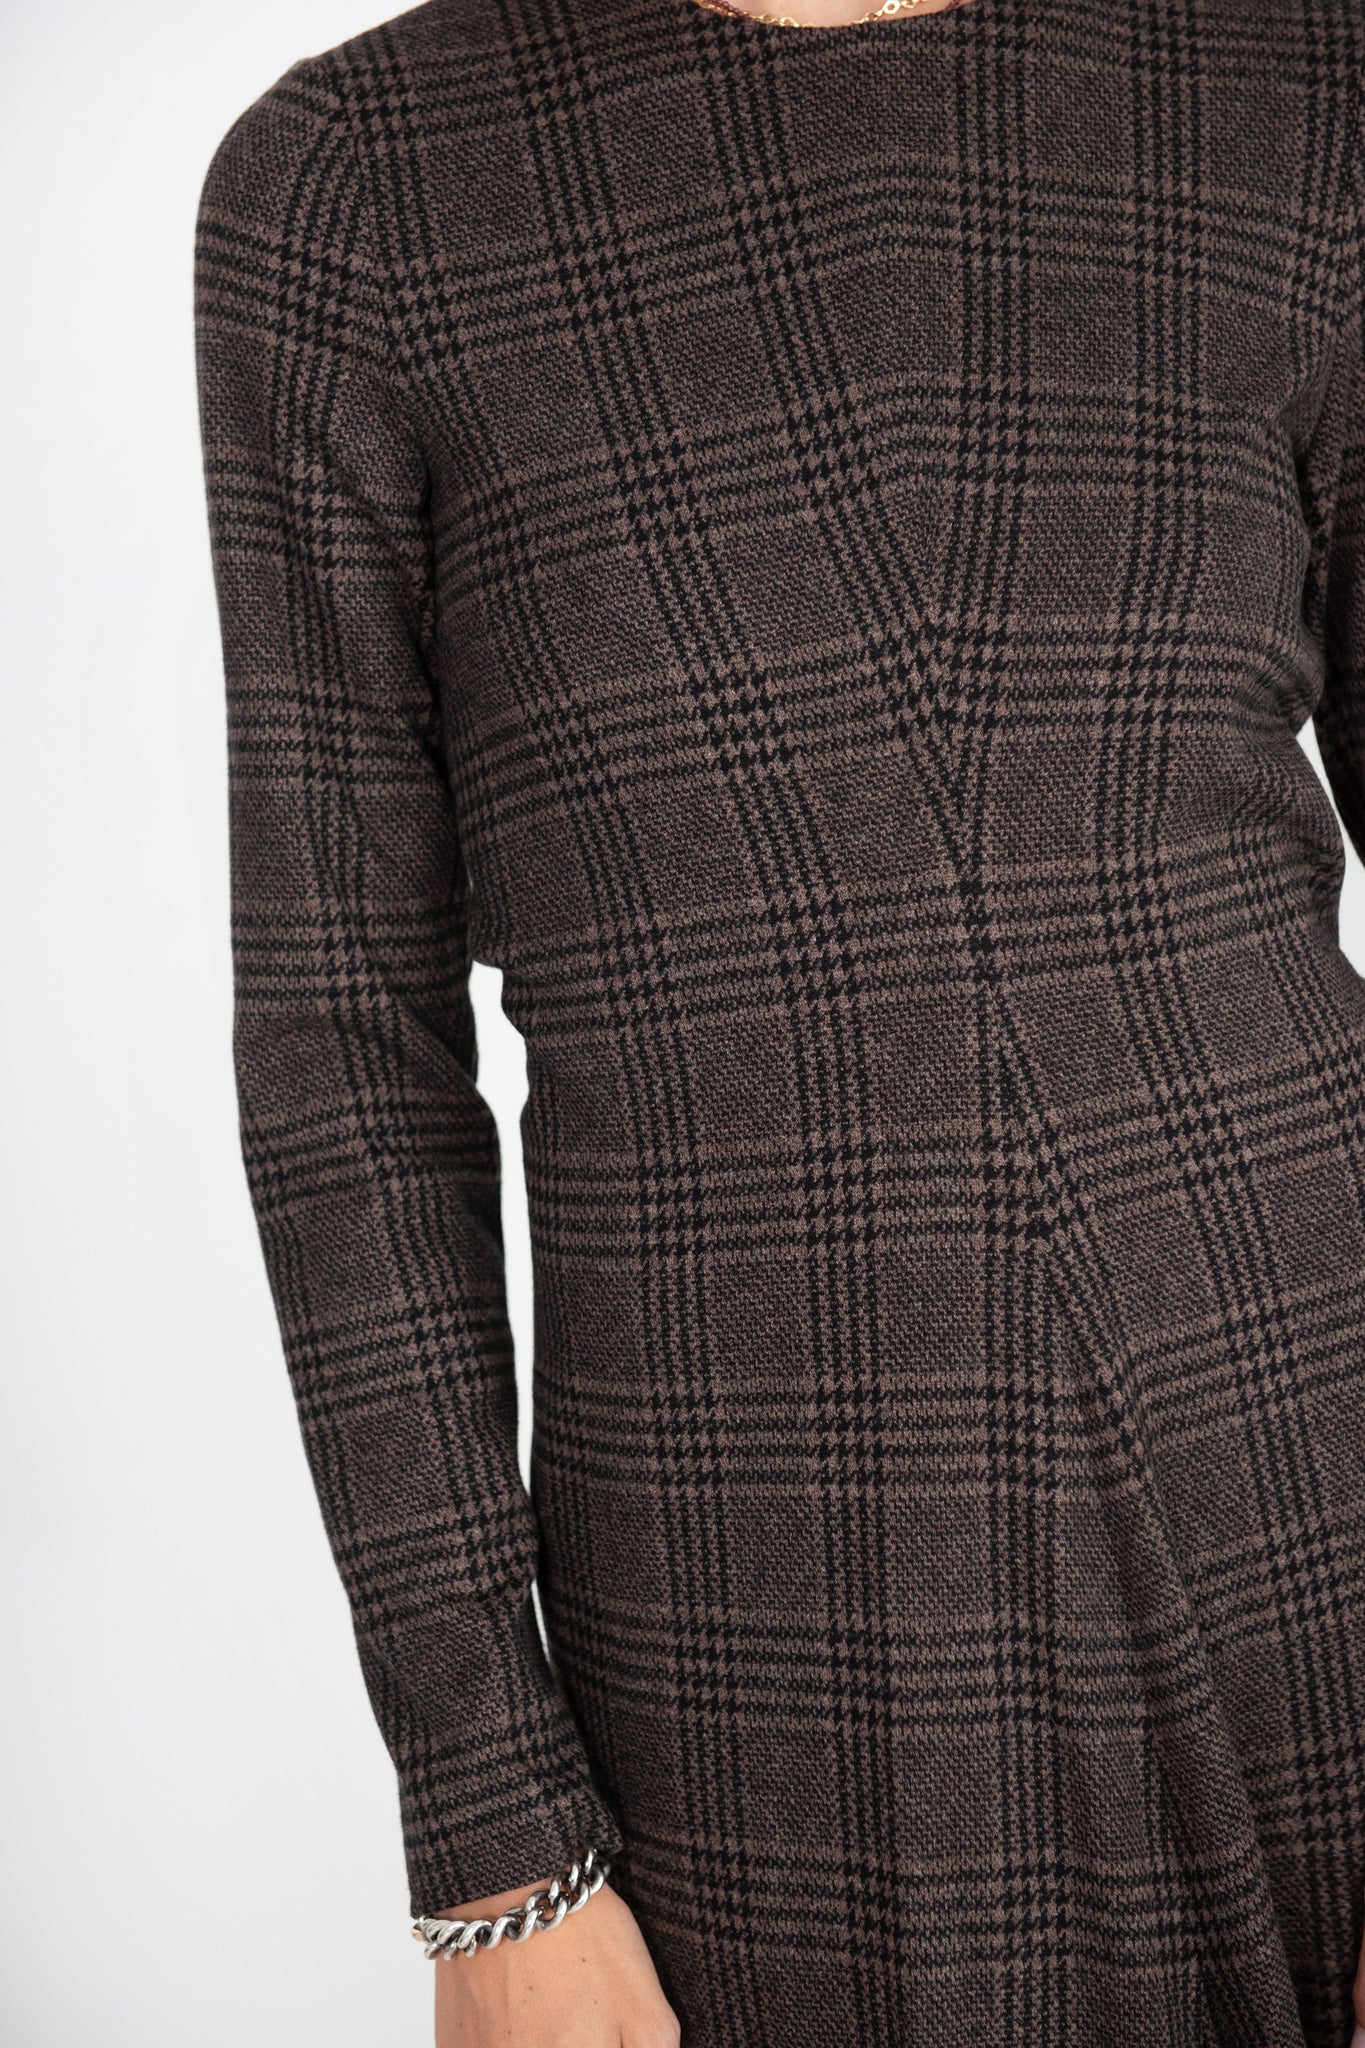 TIBI - Lutz Knit Midi Godet Dress, Brown & Black Multi